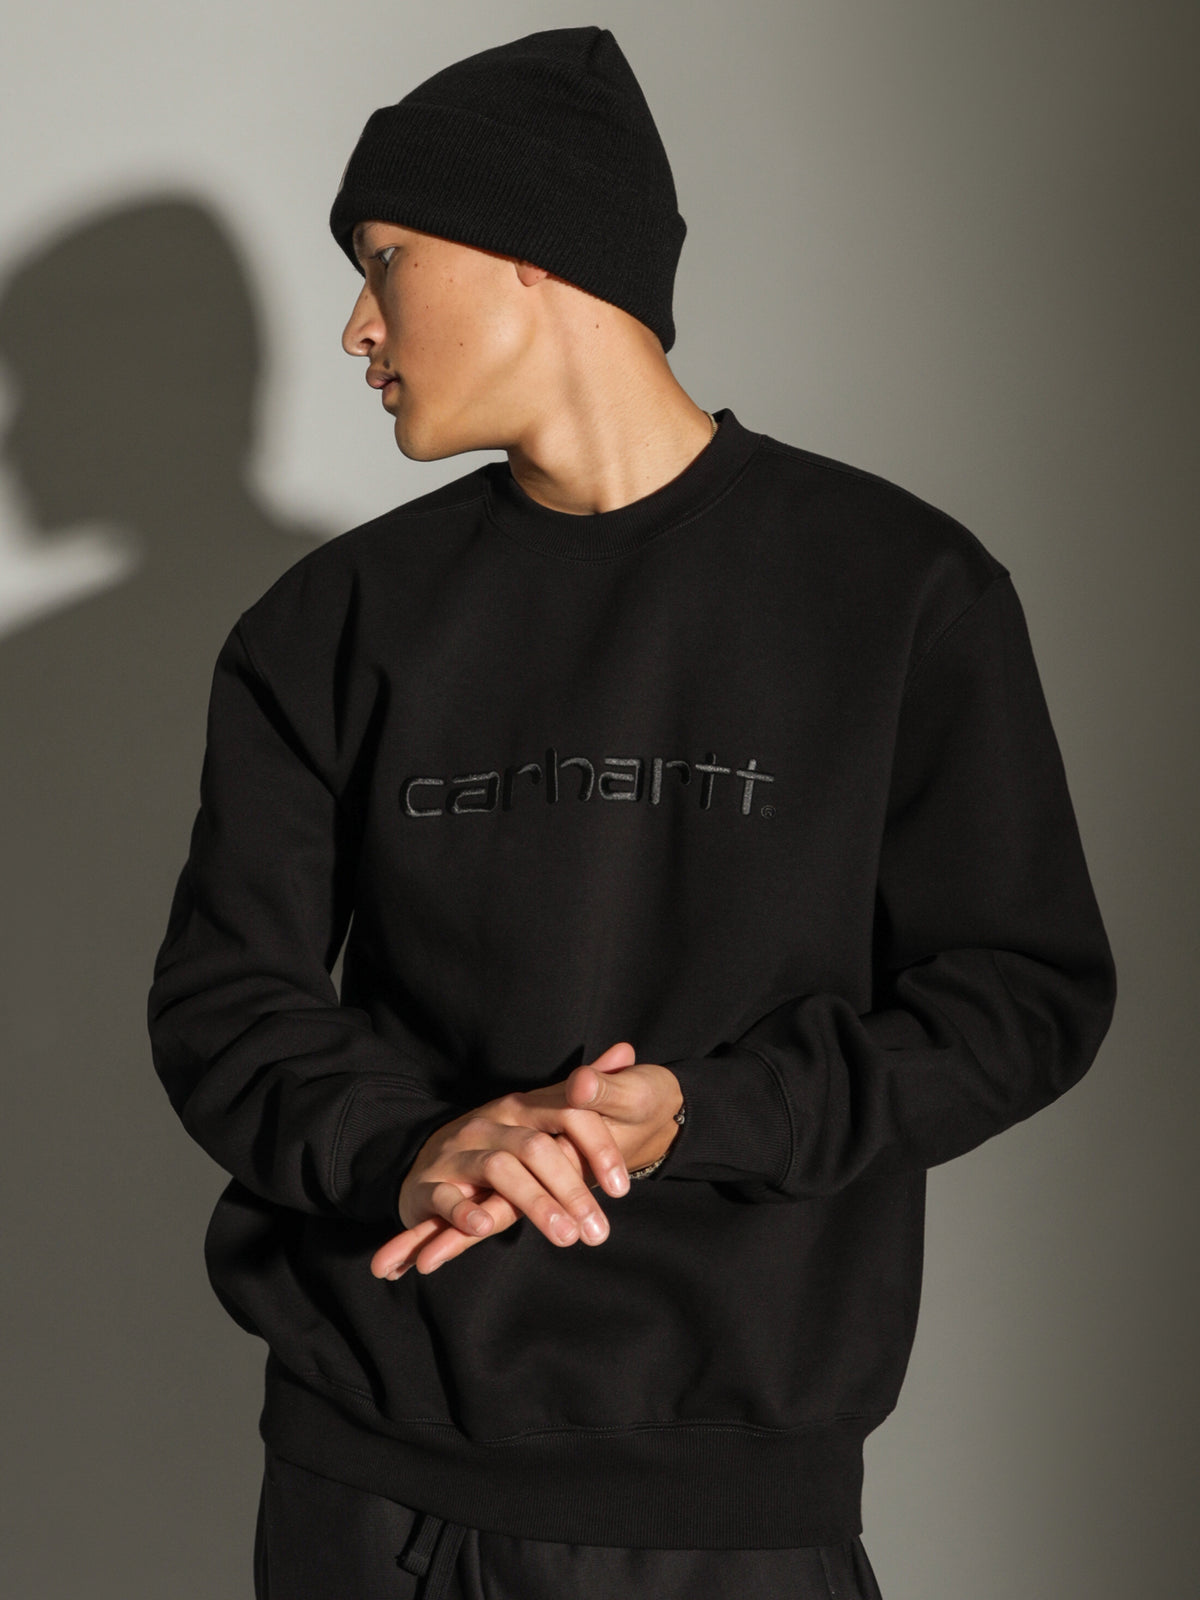 Carhartt Sweatshirt in Black